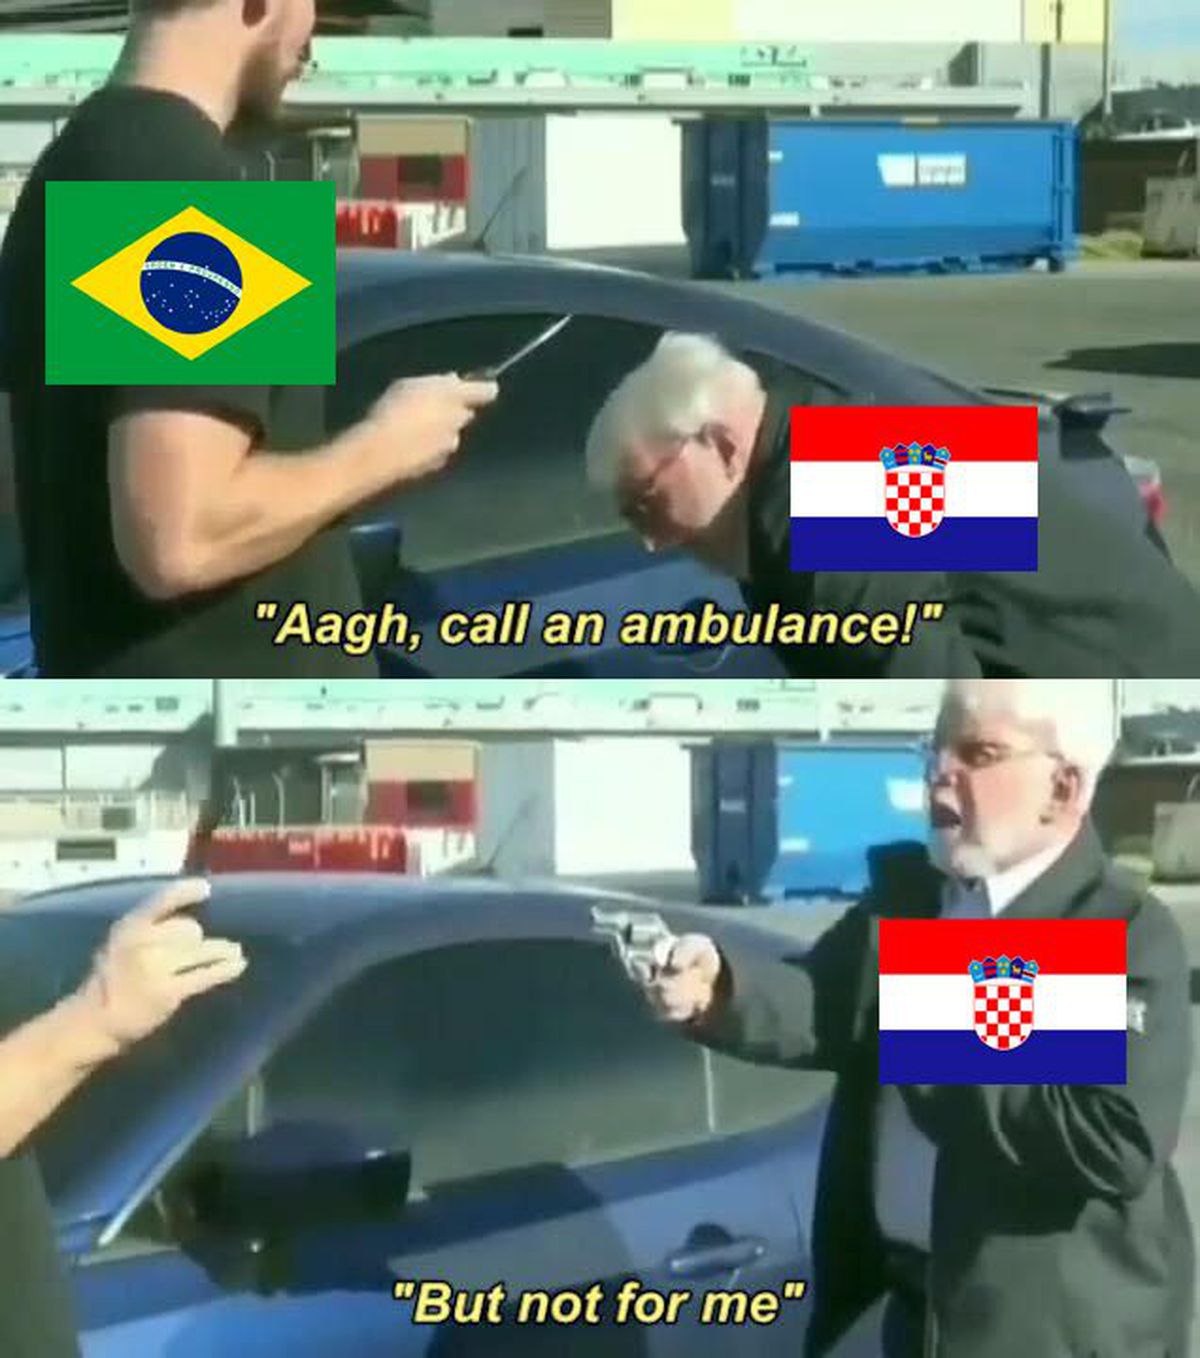 Glume Croatia - Brazilia